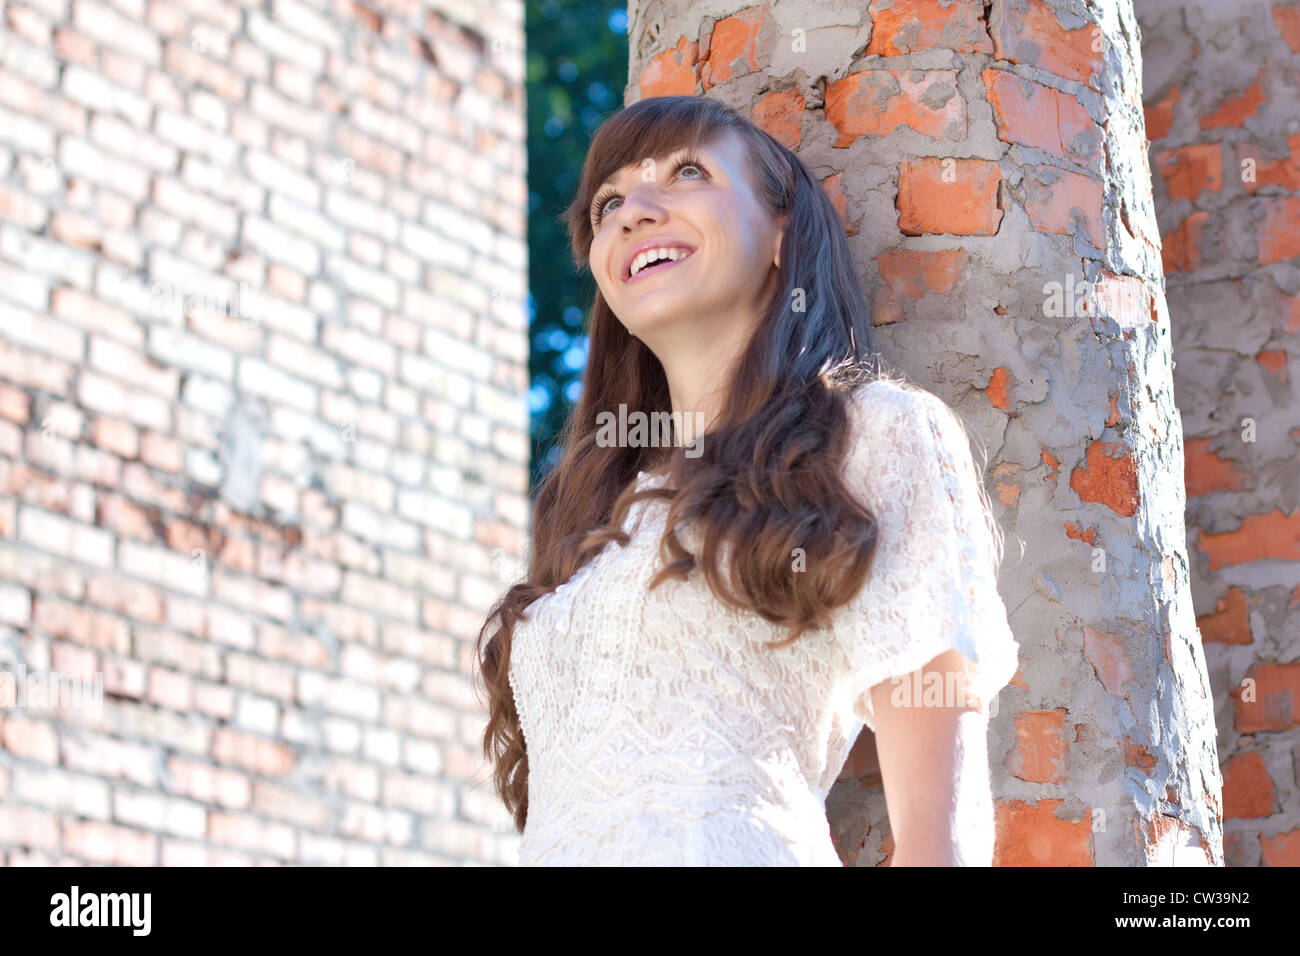 Pretty smilling girl and brick walls Stock Photo